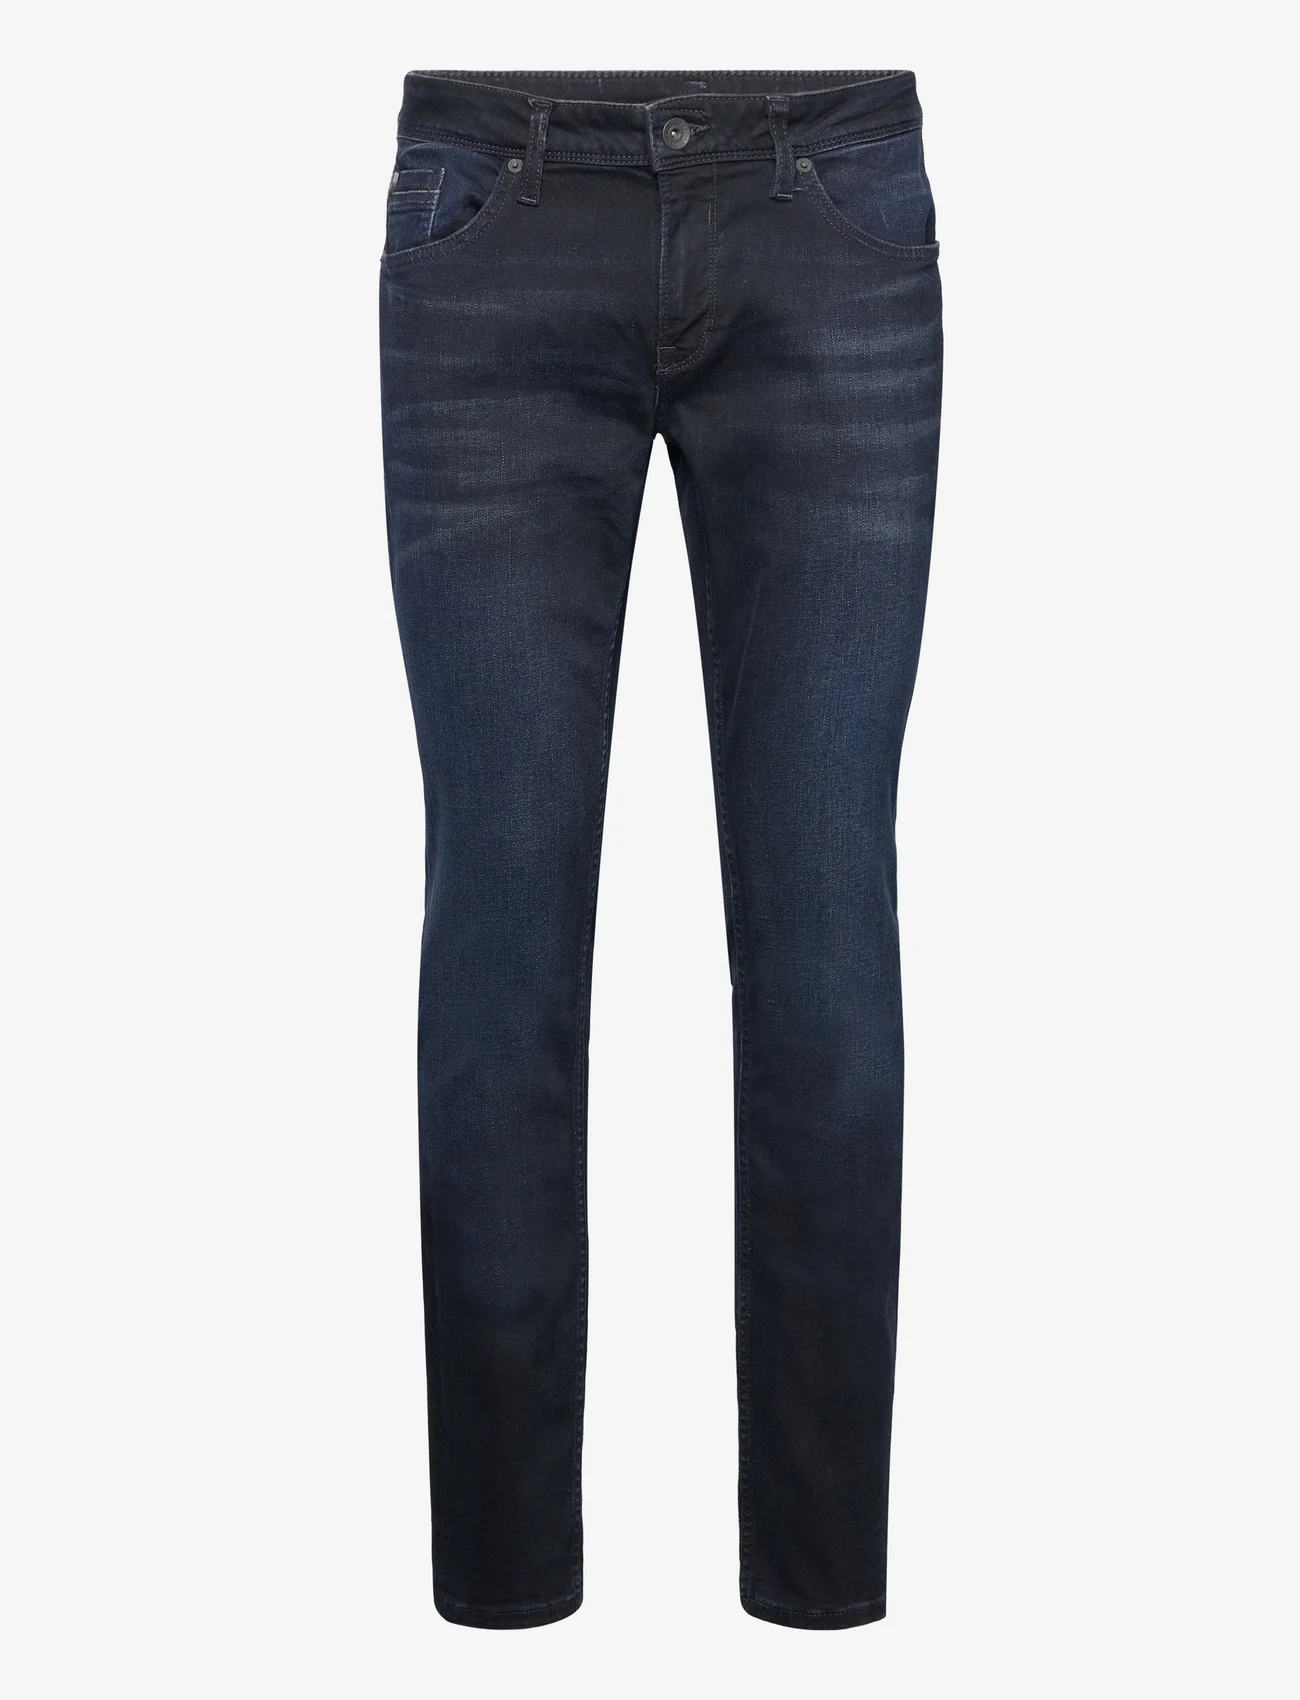 Garcia - Savio - slim fit jeans - blue - 0